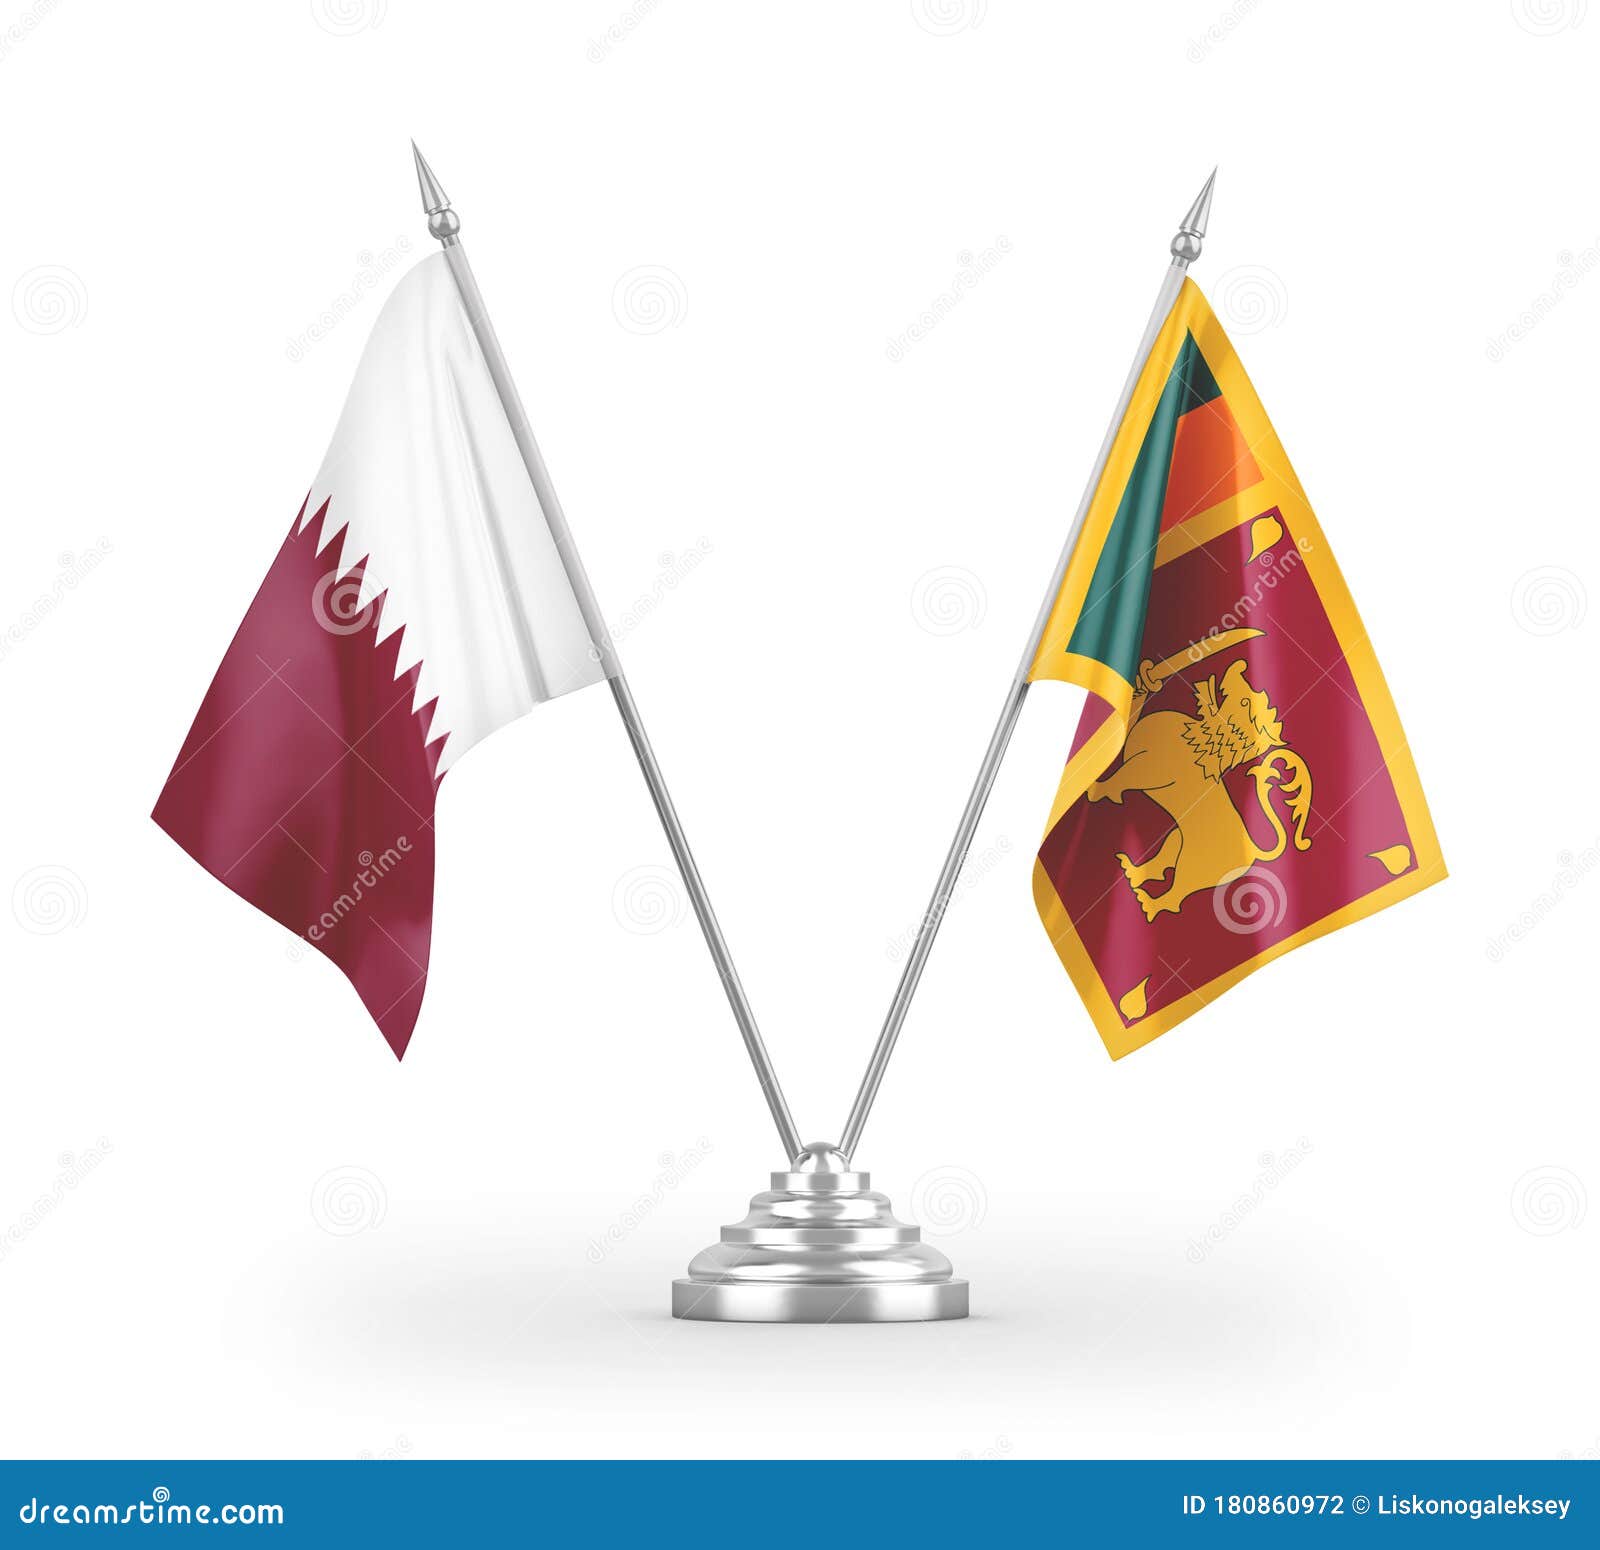 EXPERT CHRONICLE™ Sri-lanka-qatar-table-flags-isolated-white-d-rendering-sri-lanka-qatar-table-flags-isolated-white-background-d-180860972